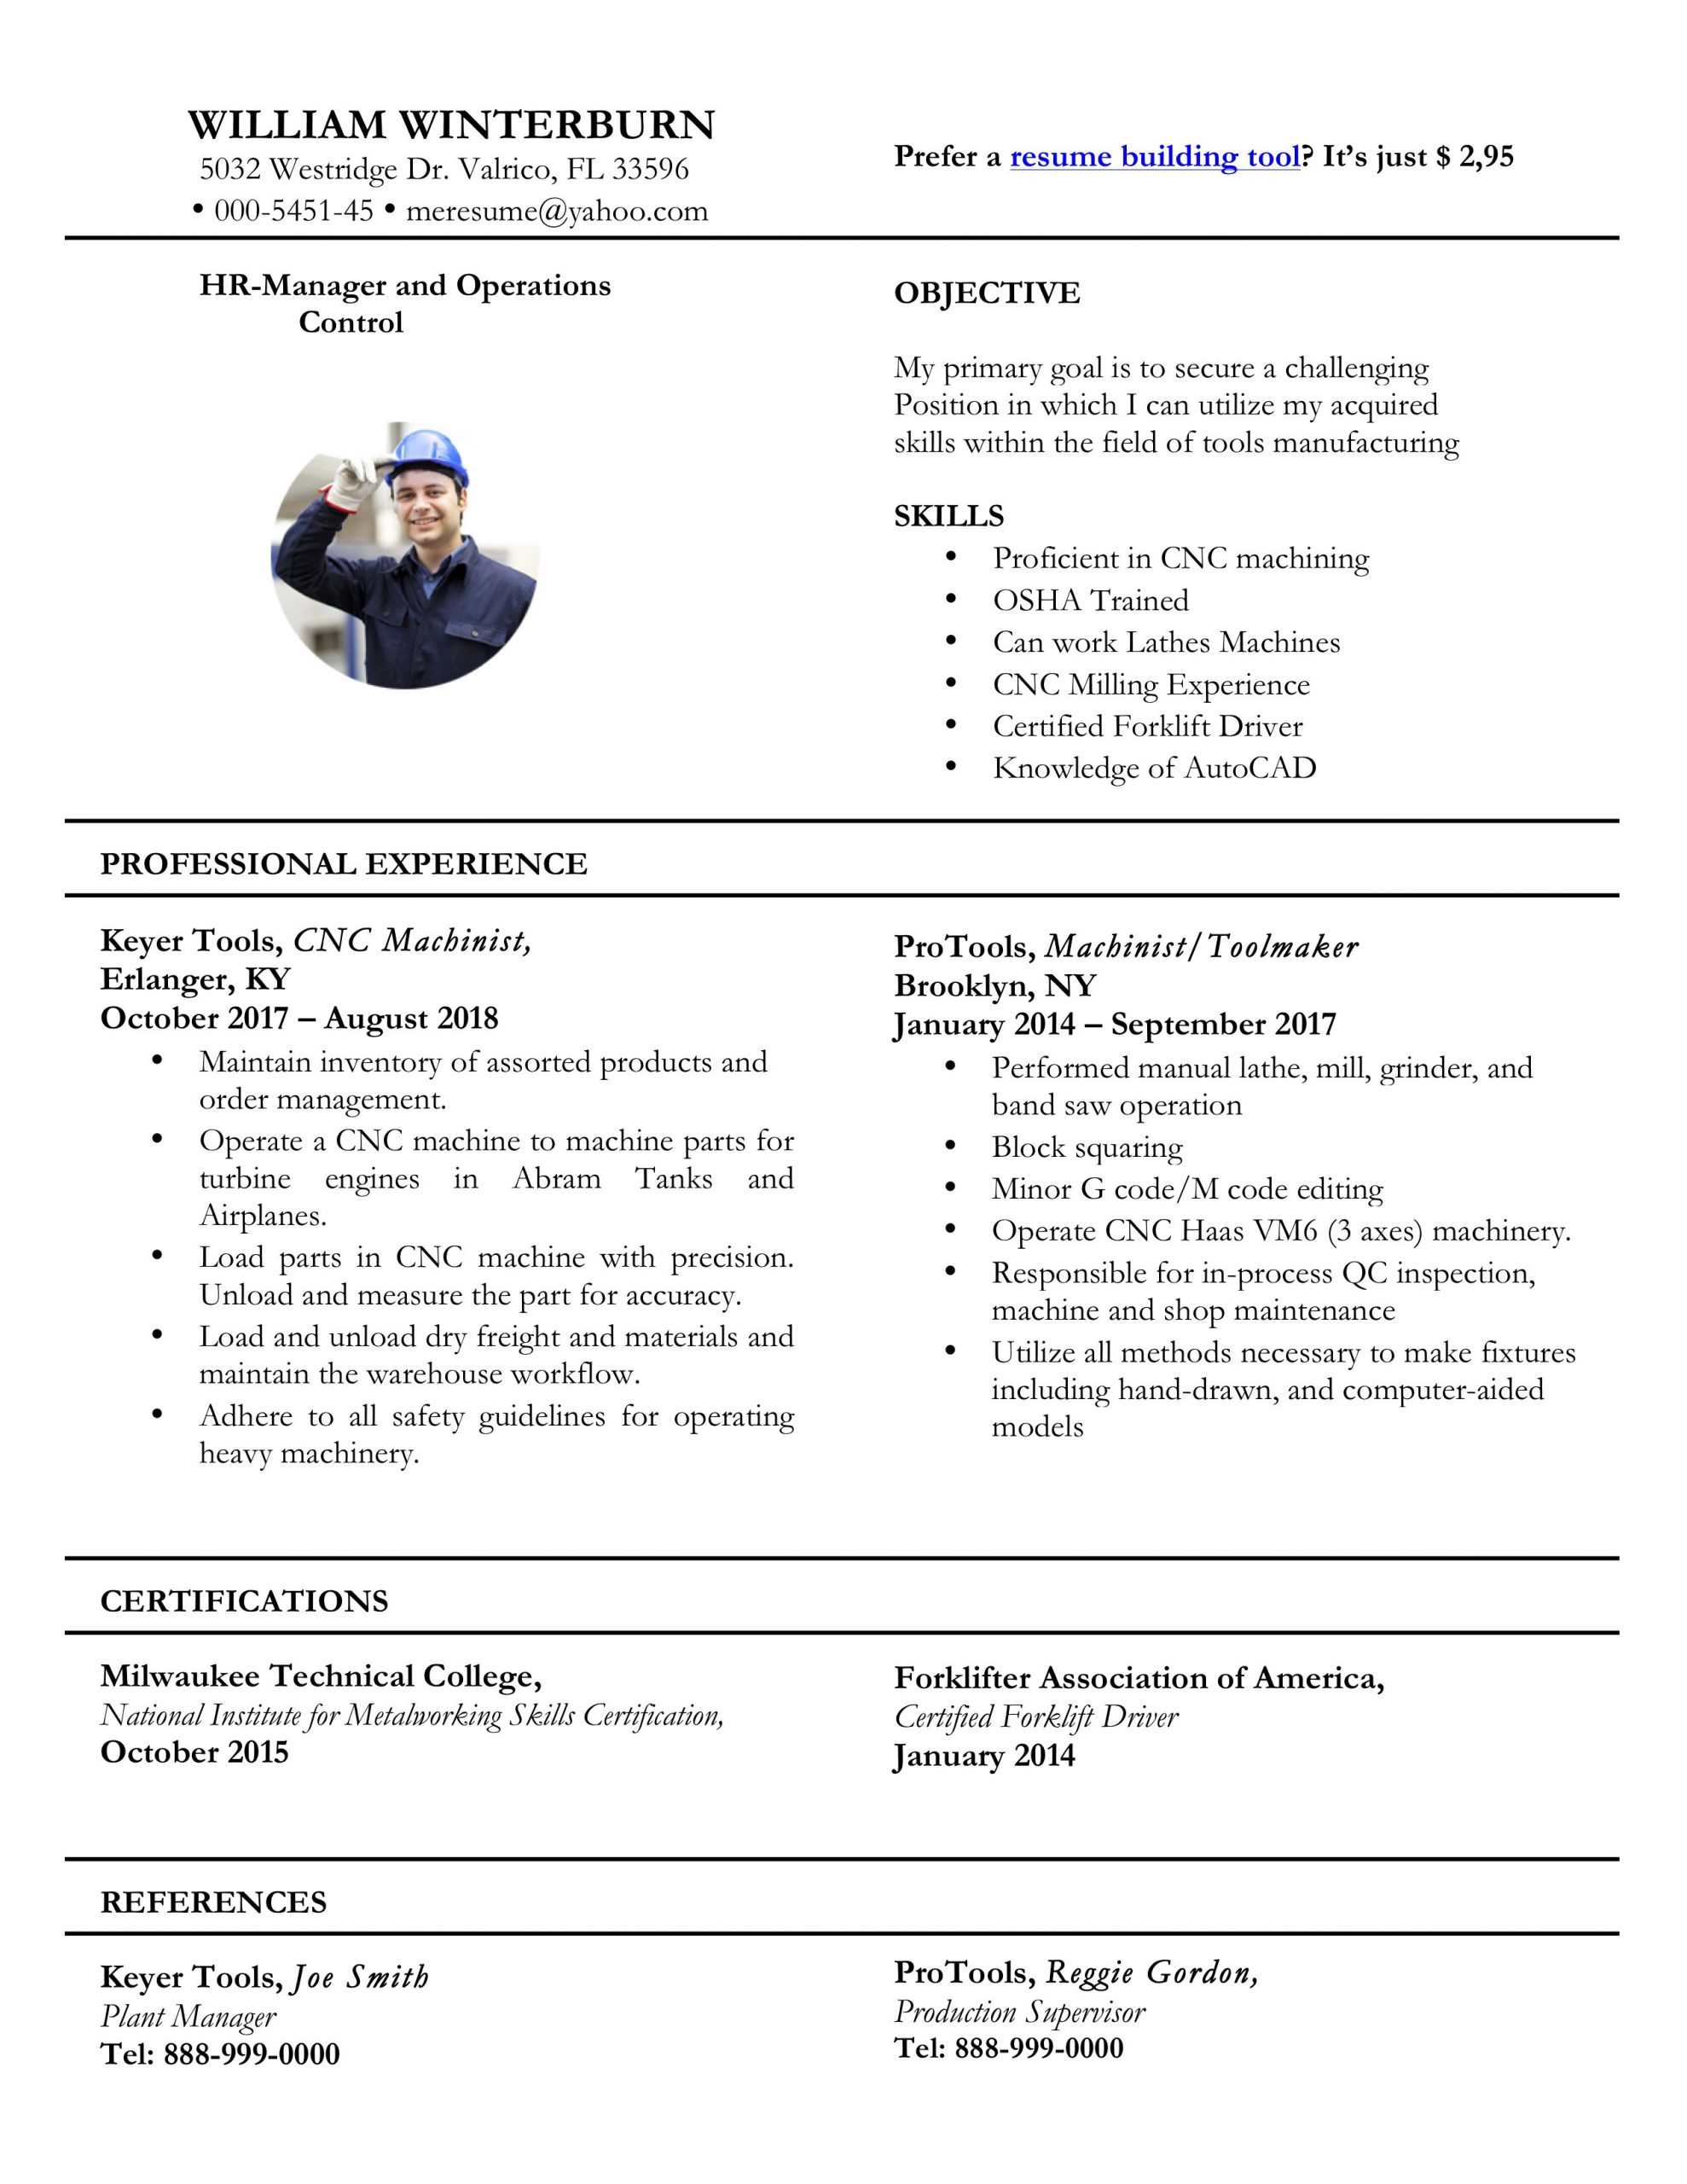 Resume for Job Application Sample Pdf 76lancarrezekiq Free Resume Templates [2021] Pdf & Word Downloads